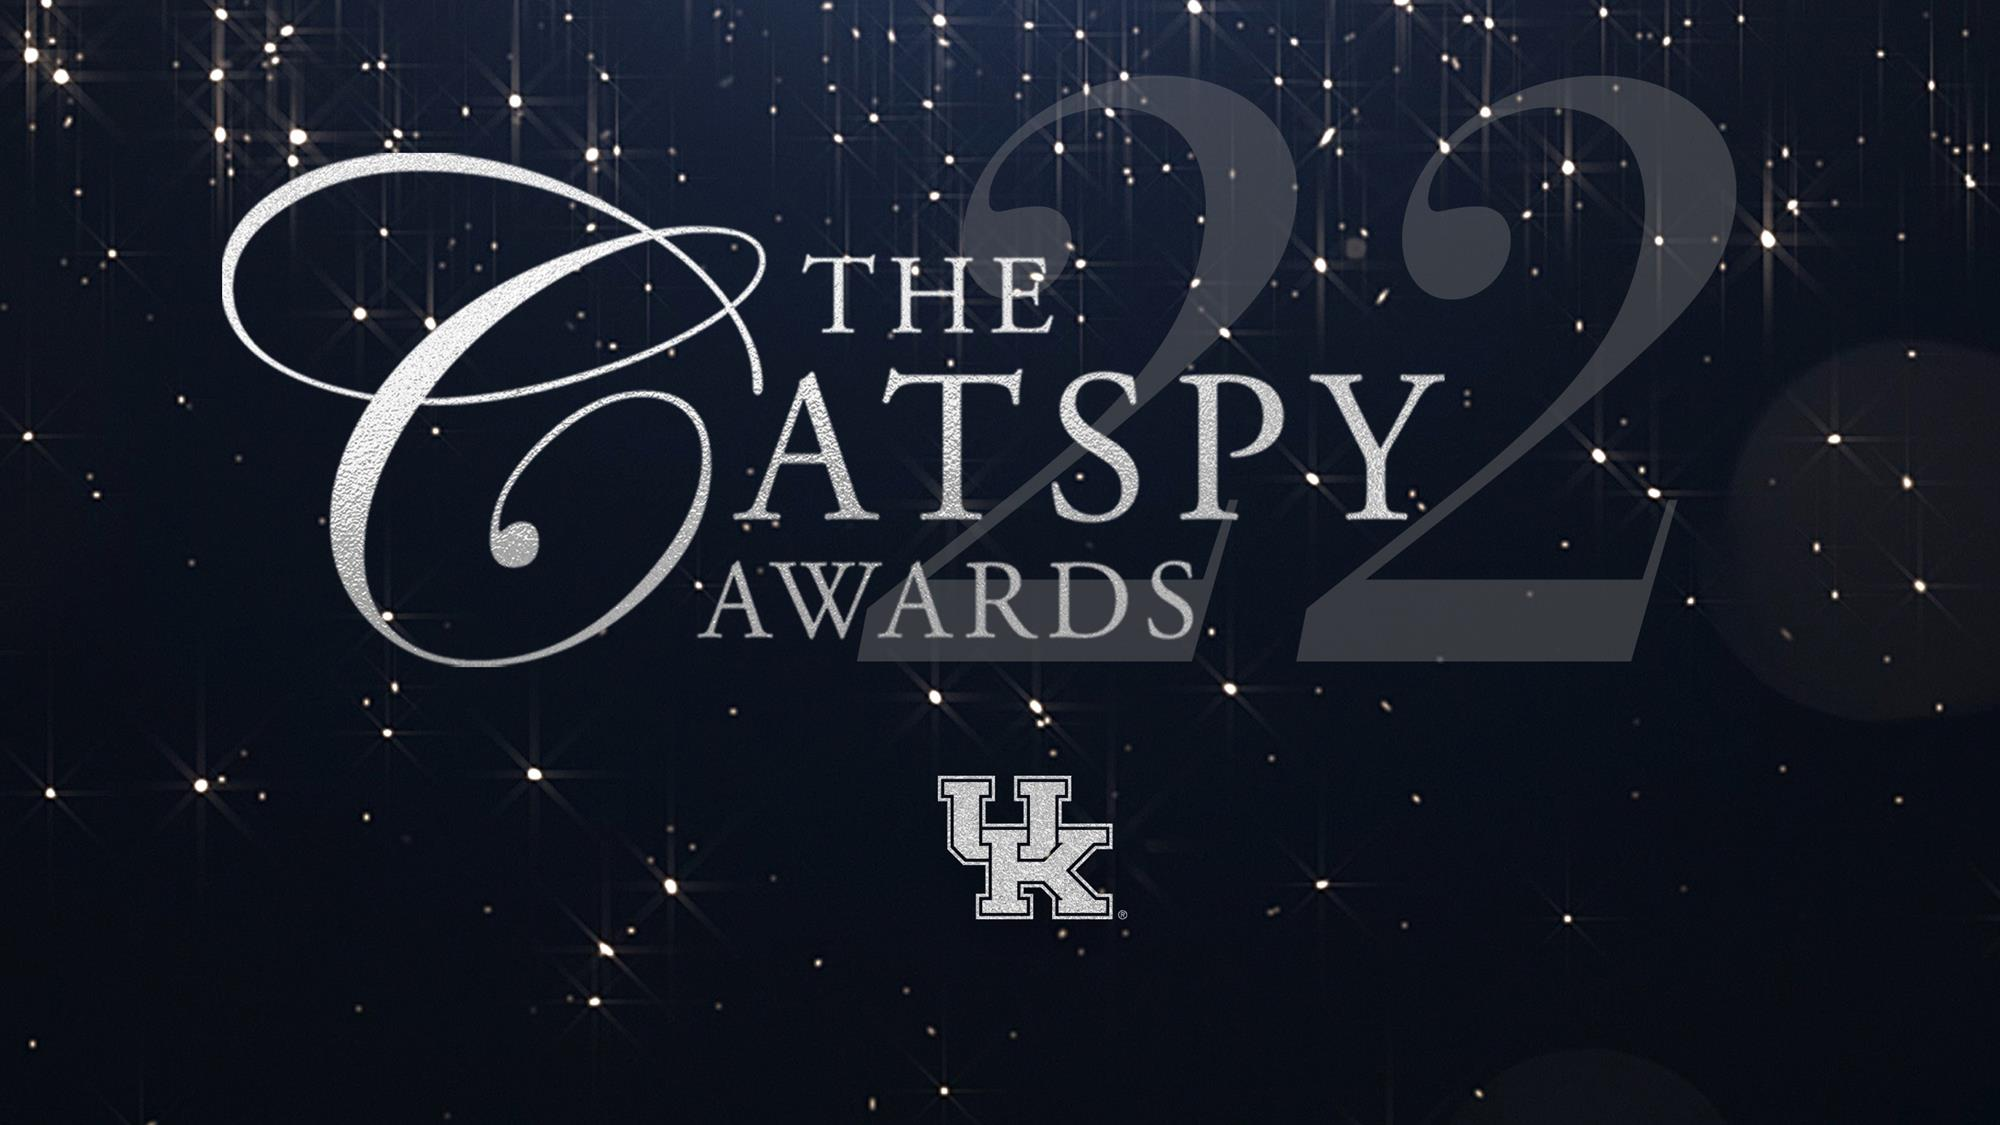 2022 CATSPY Awards Presented